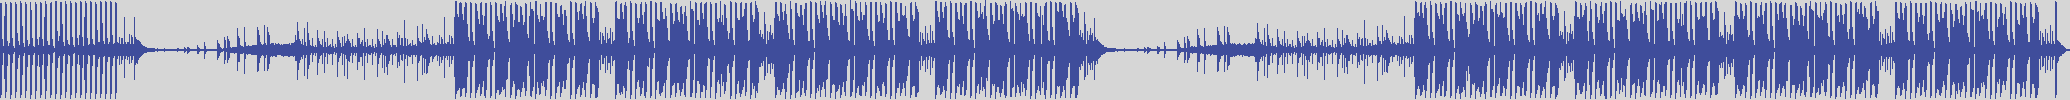 atomic_recordings [AR003] Max Veron - New Reality [Alexandre Crlton's House Mix] audio wave form